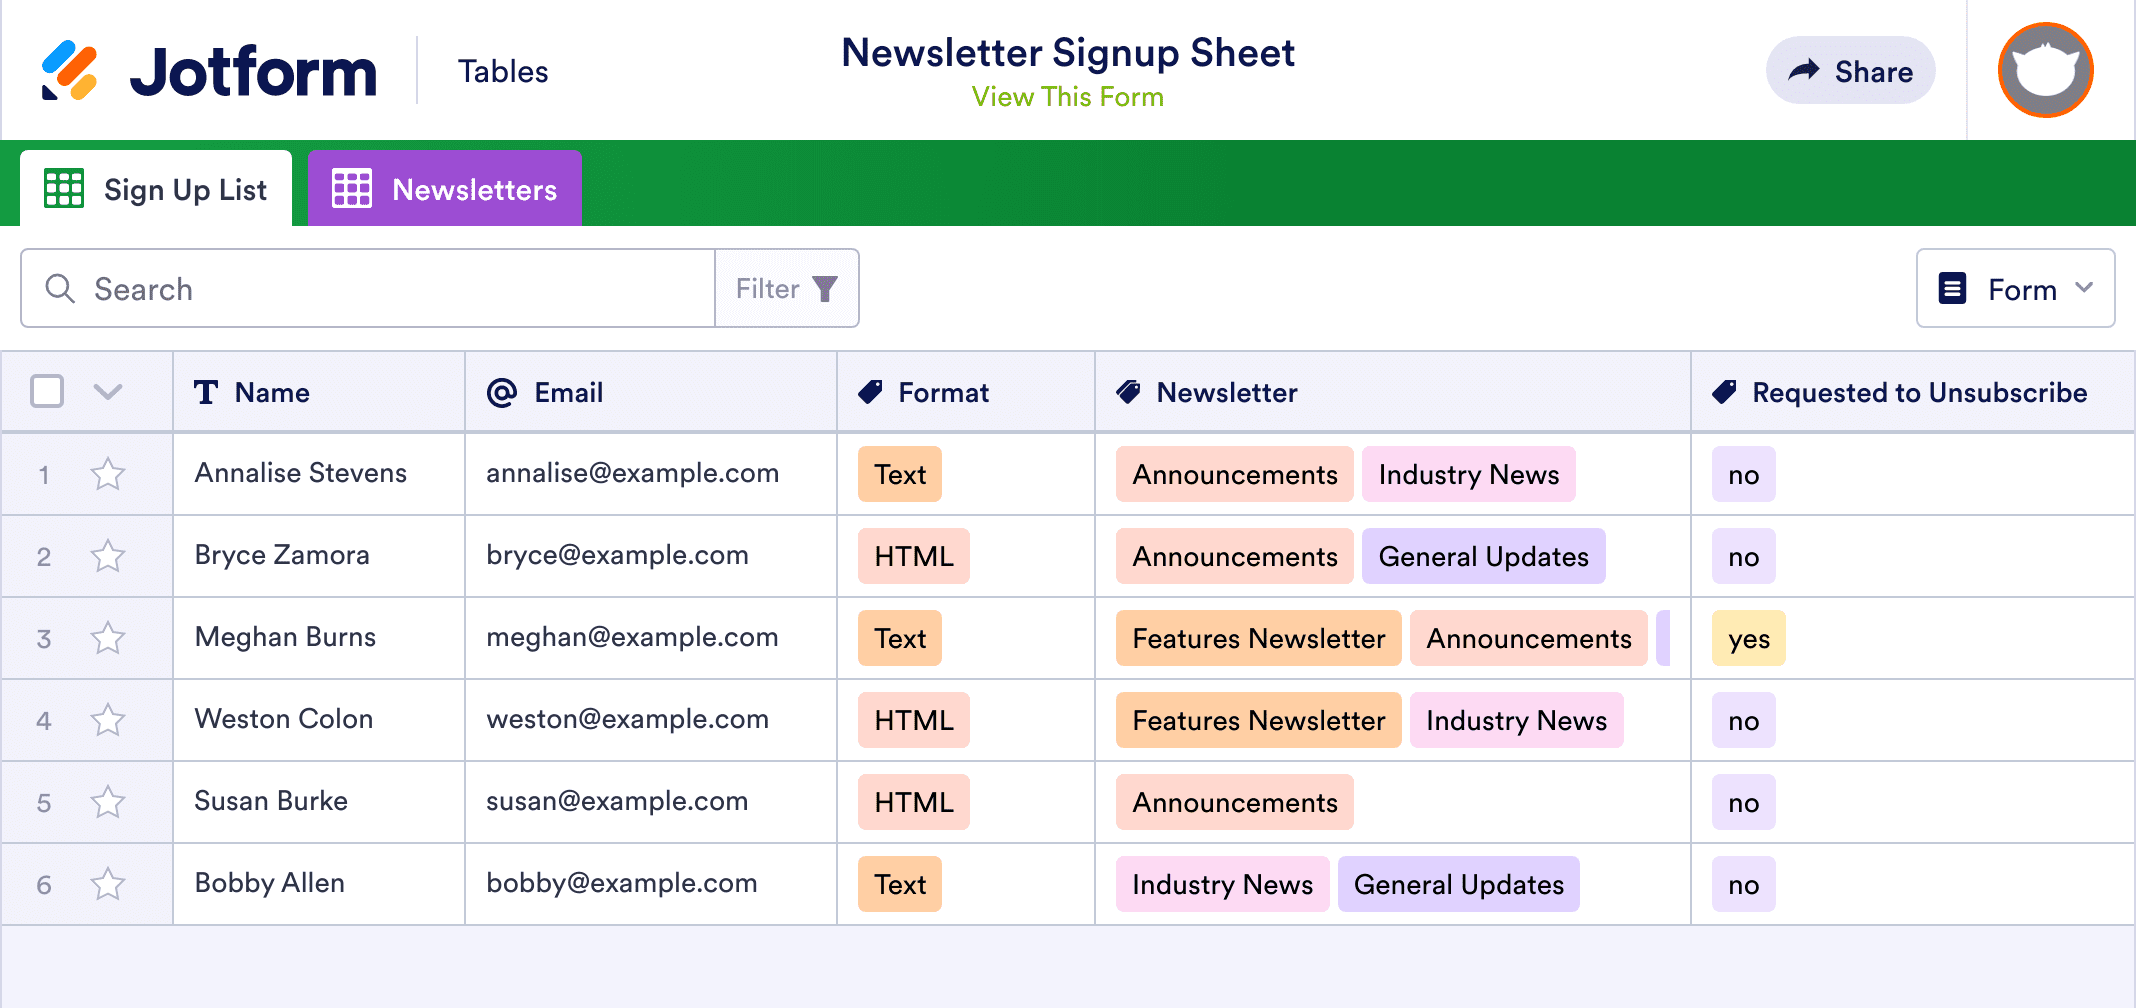 Newsletter Signup Sheet Template | Jotform Tables